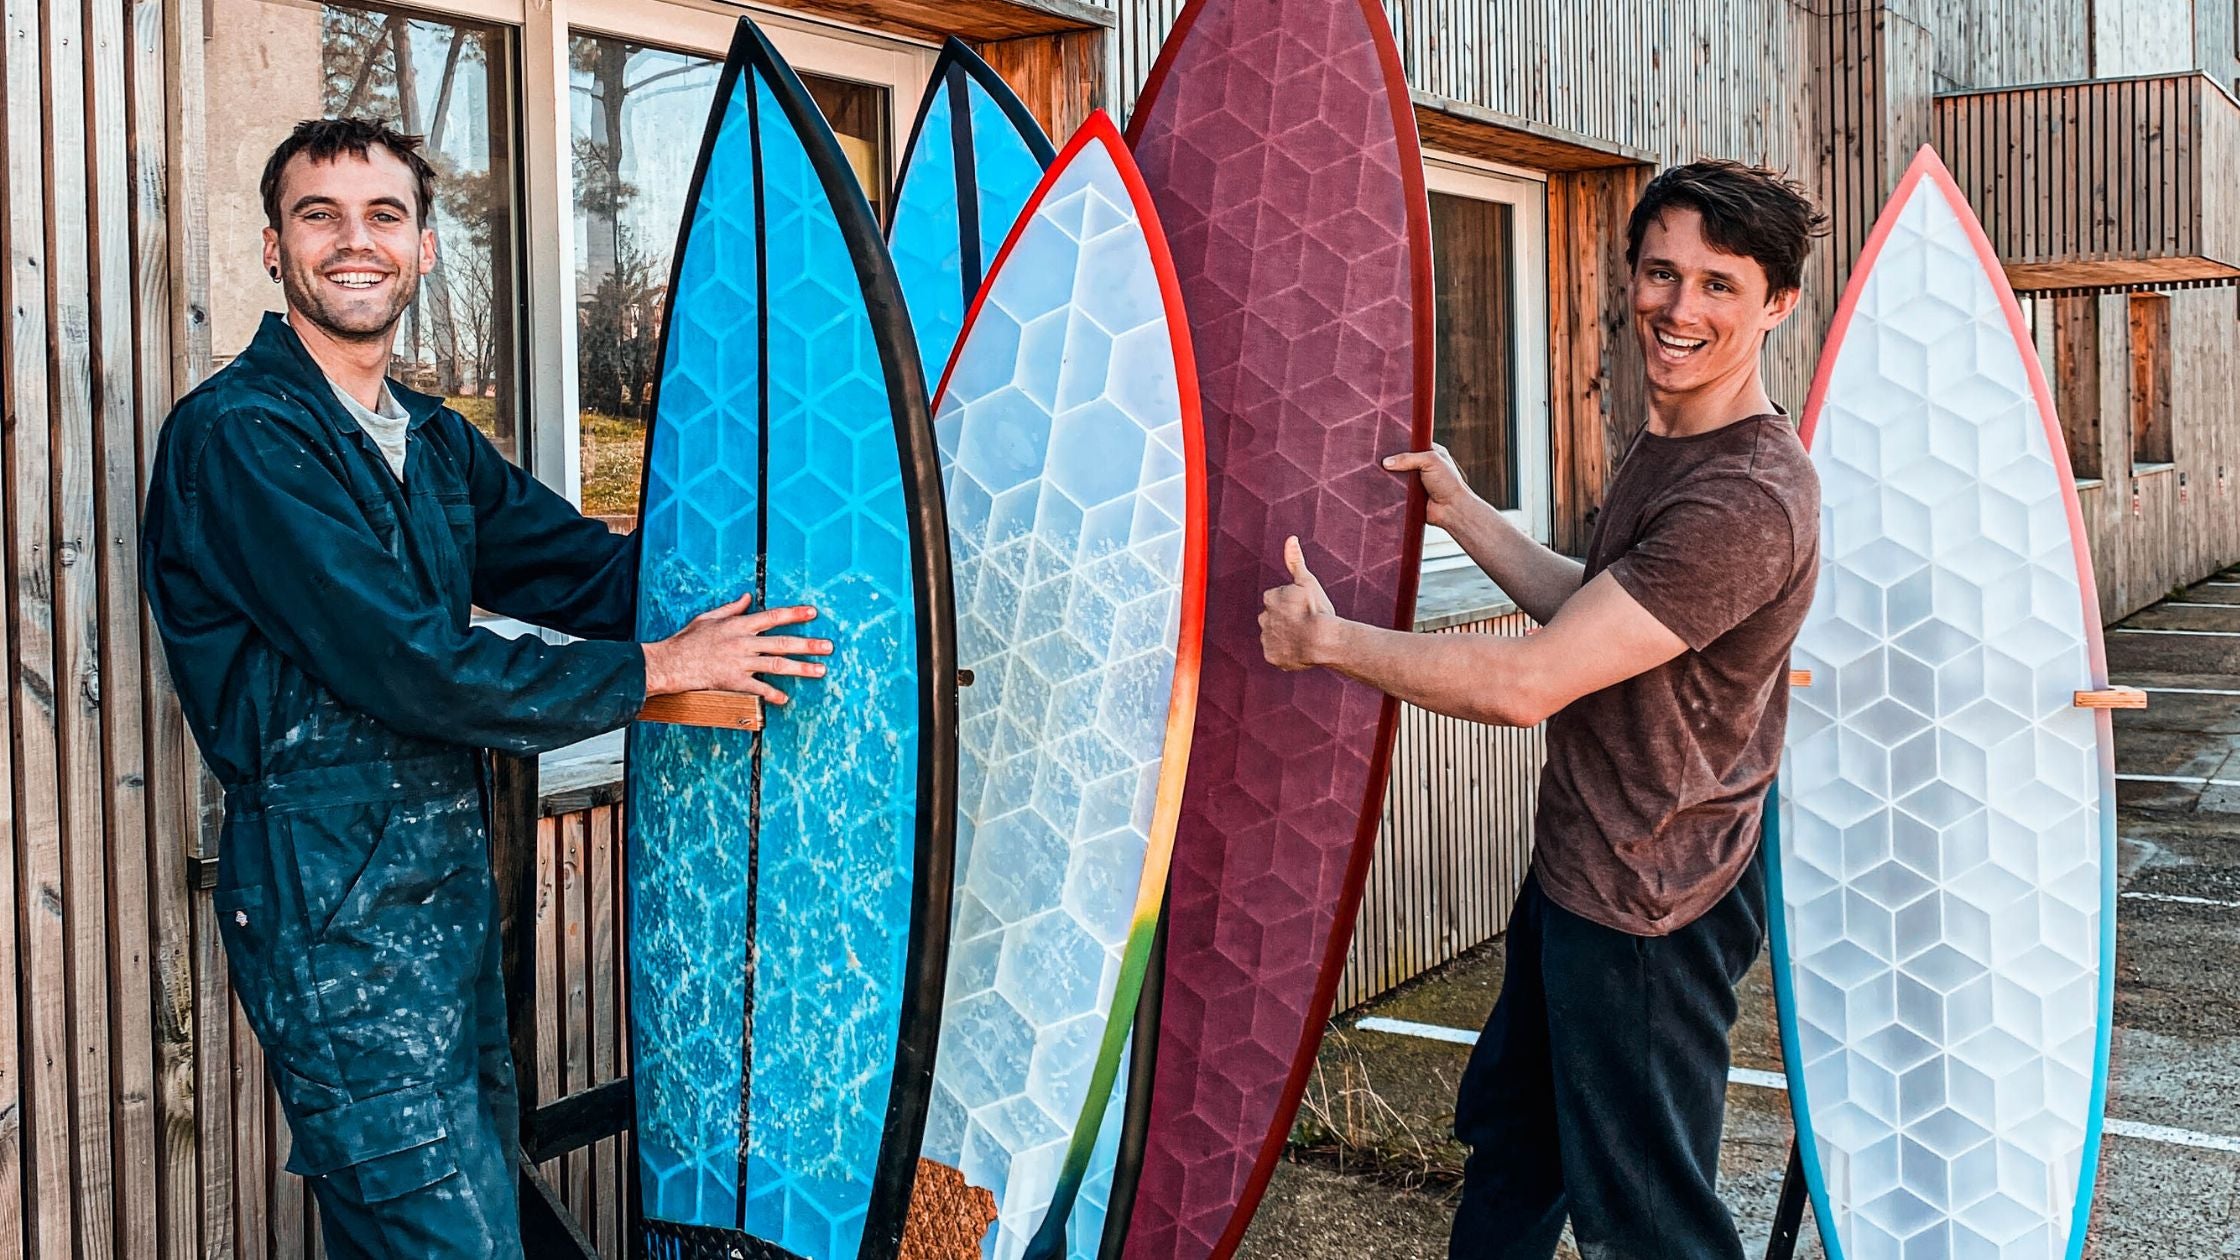 Sidewalk Surfer - Surf Skateboarding Design - Inspire Uplift